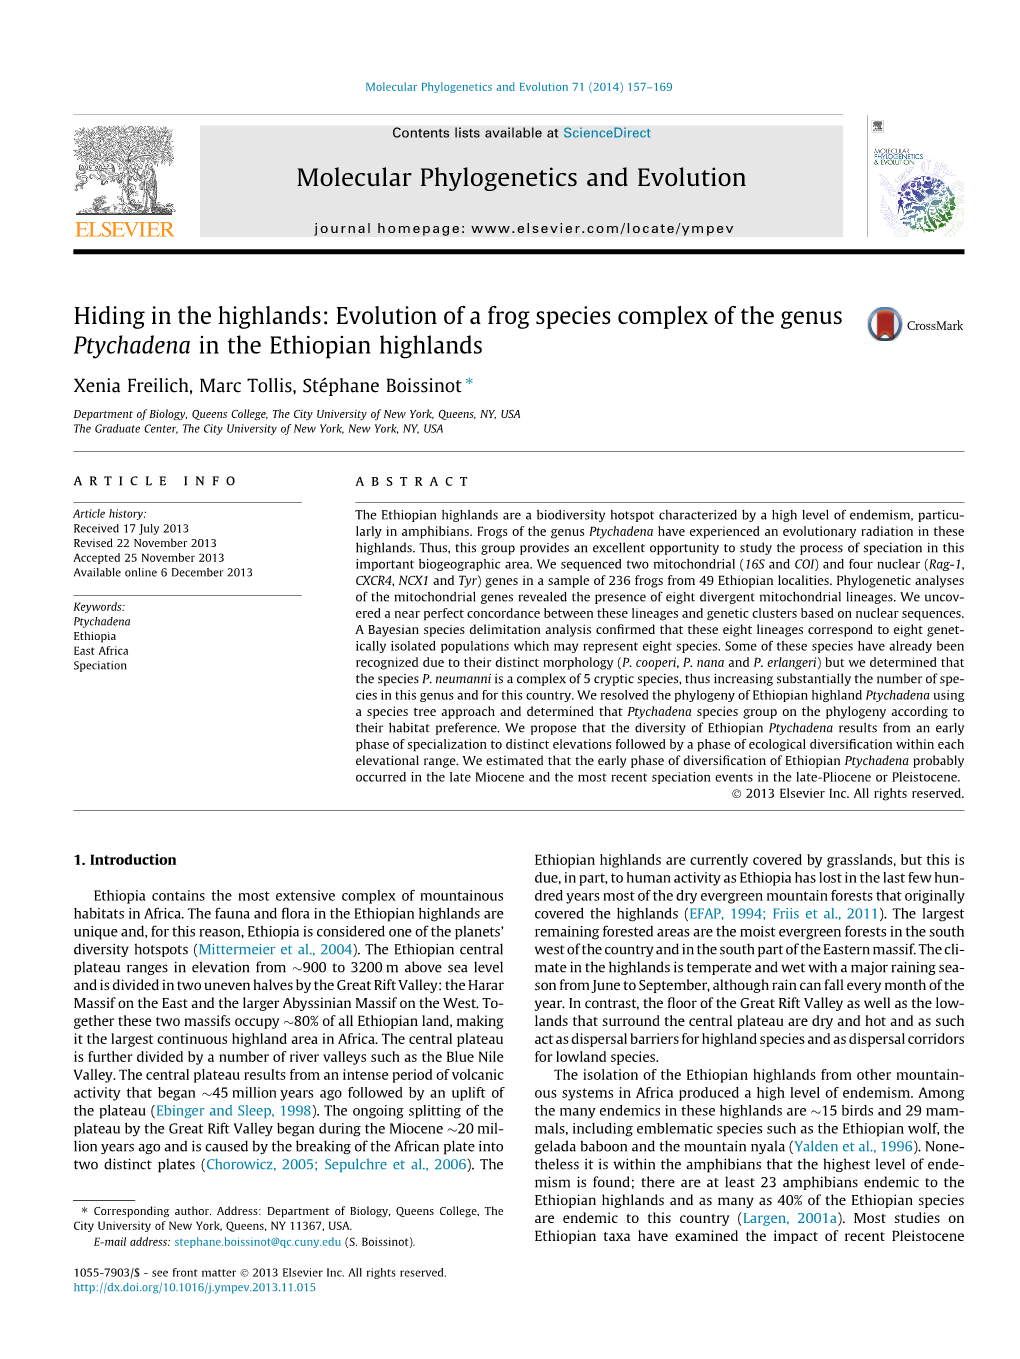 Evolution of a Frog Species Complex of the Genus Ptychadena in the Ethiopian Highlands ⇑ Xenia Freilich, Marc Tollis, Stéphane Boissinot